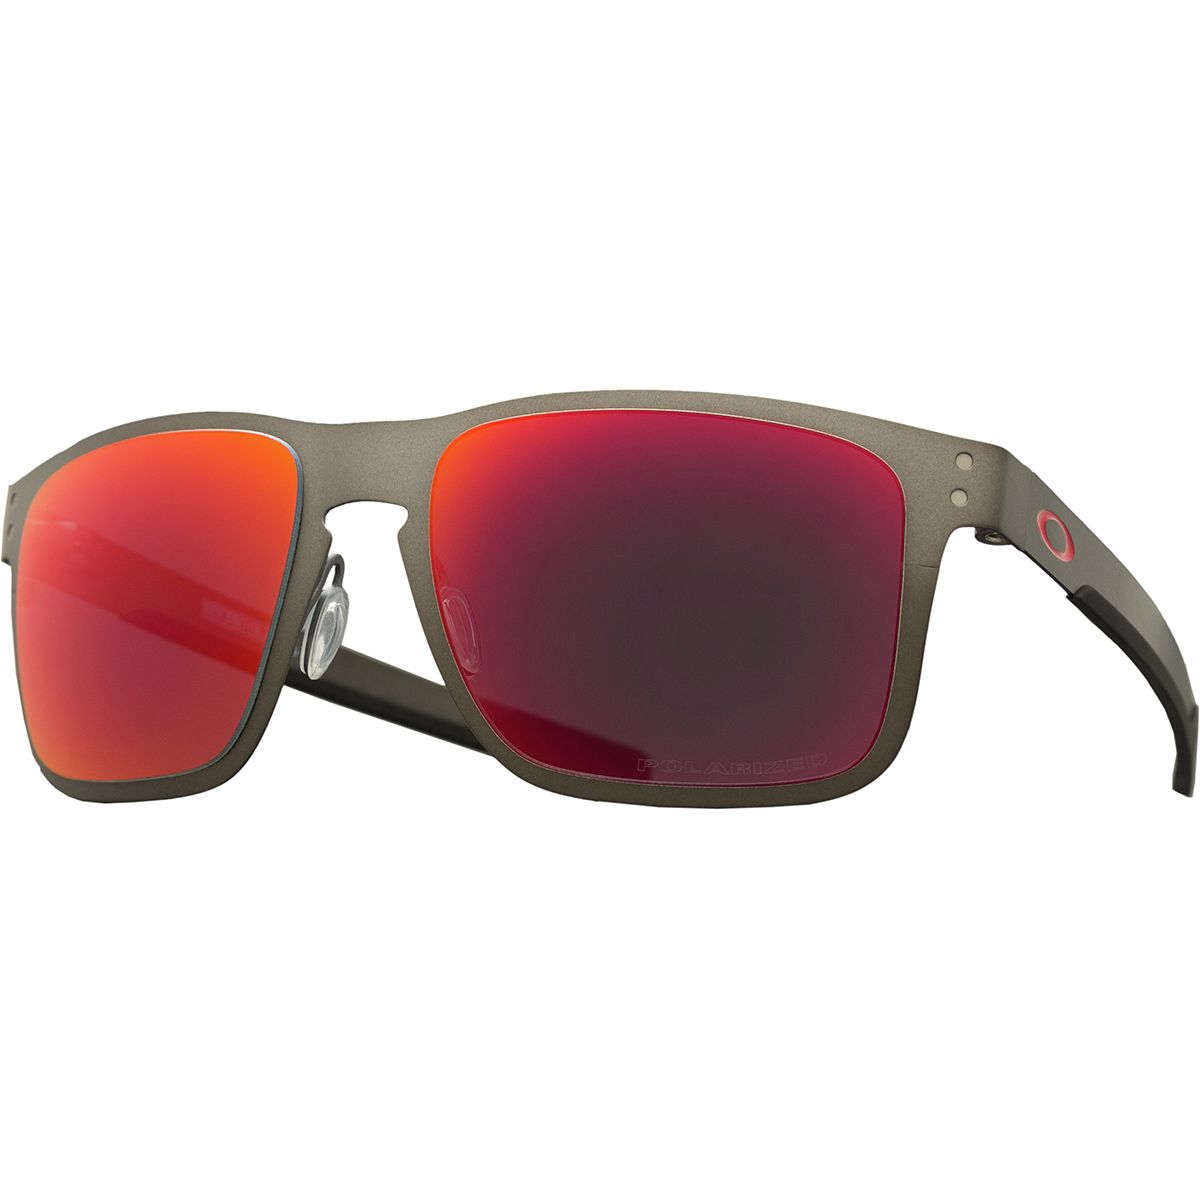 Holbrook Polarized Sunglasses - Accessories